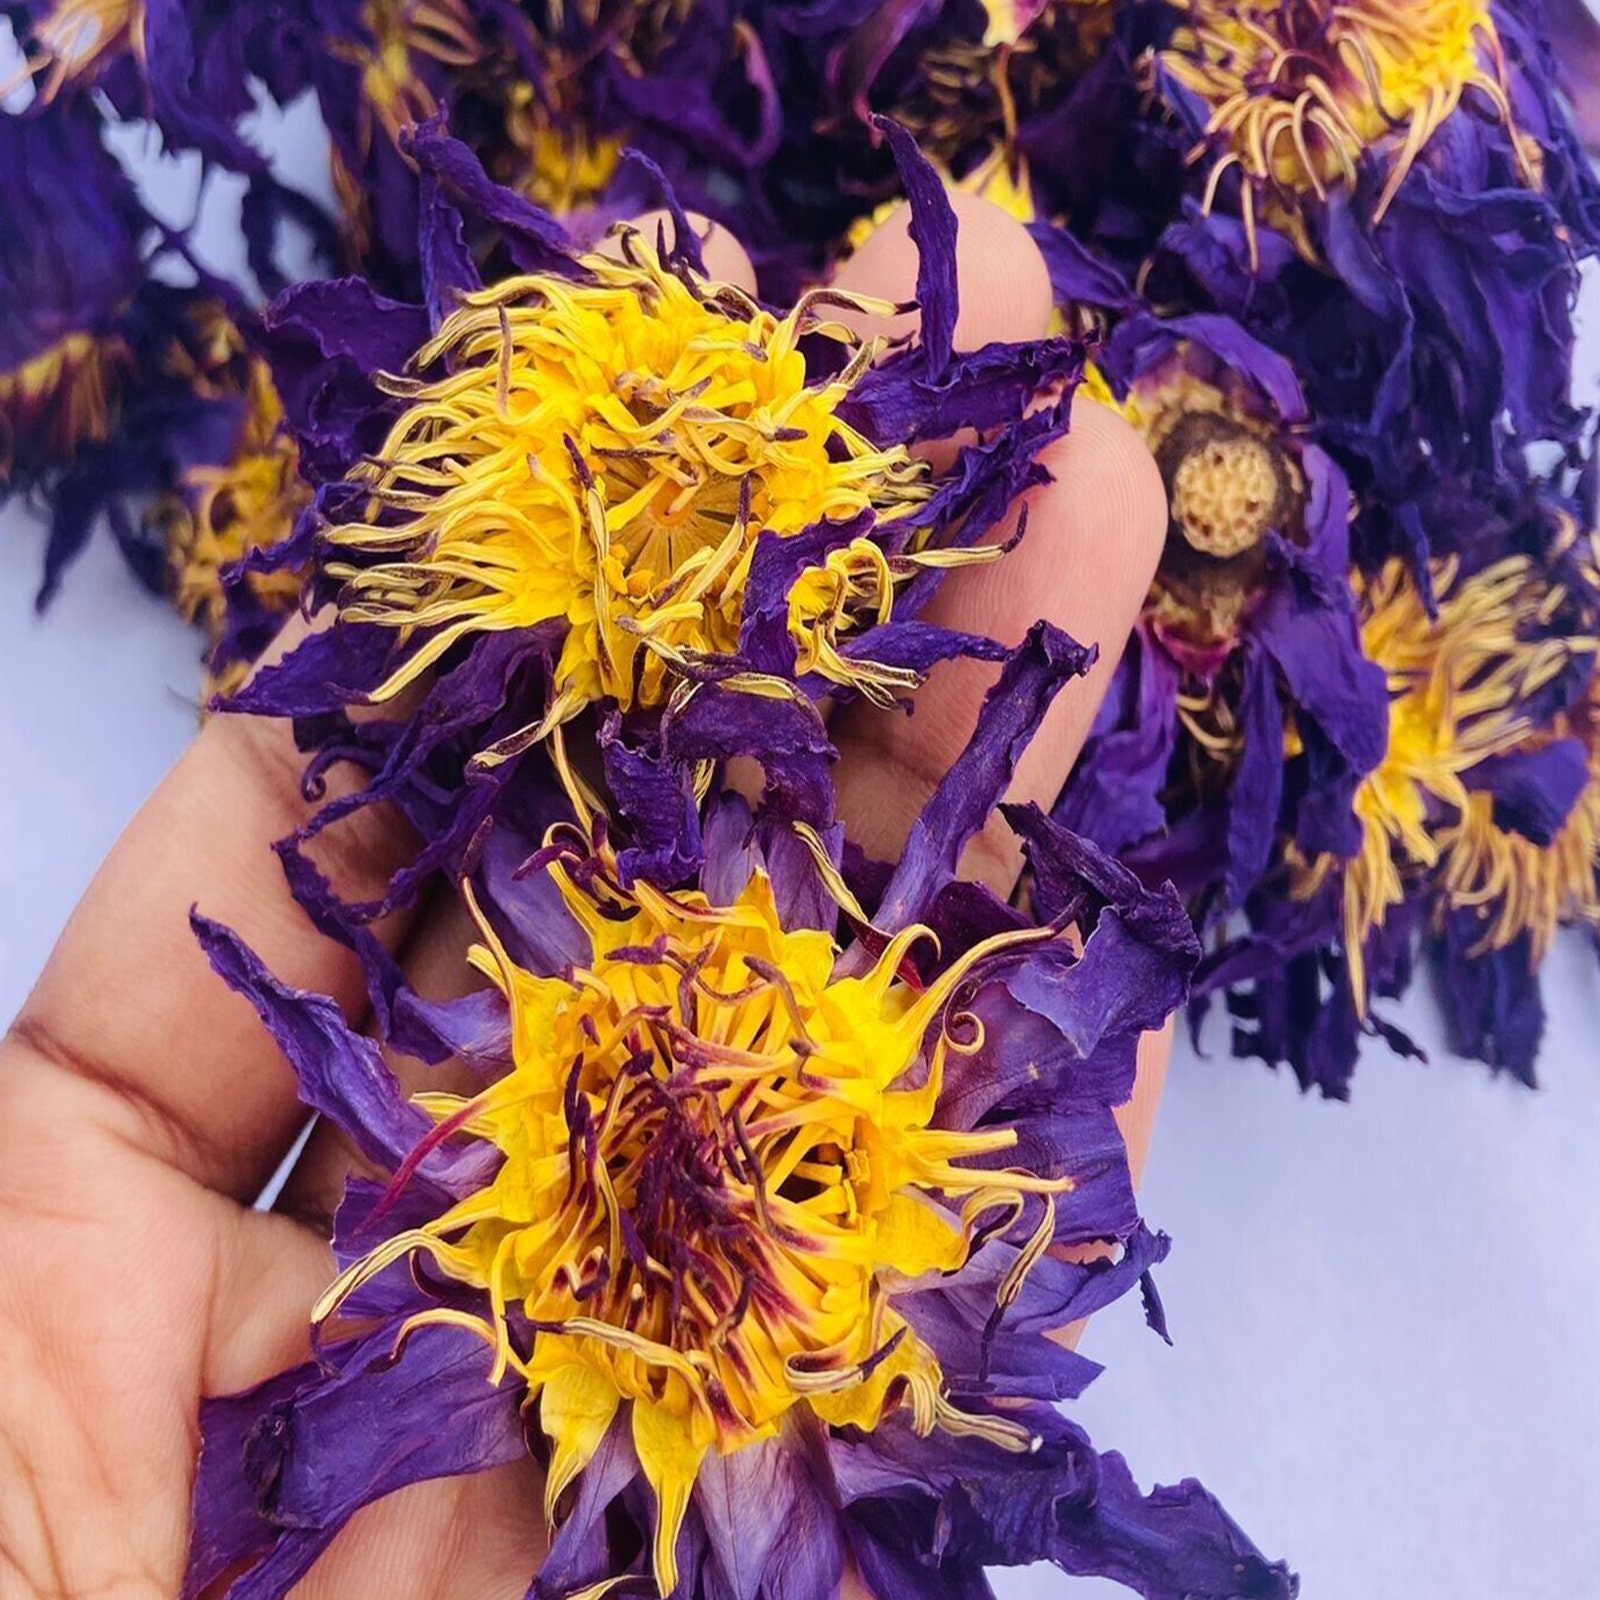 Egyptian Blue Lotus C/S Flowers (Nymphaea caerulea) - Pesticide Free -  Fresh Harvest - Pharaoh's Fantasy™ Grade - Free Shipping in USA